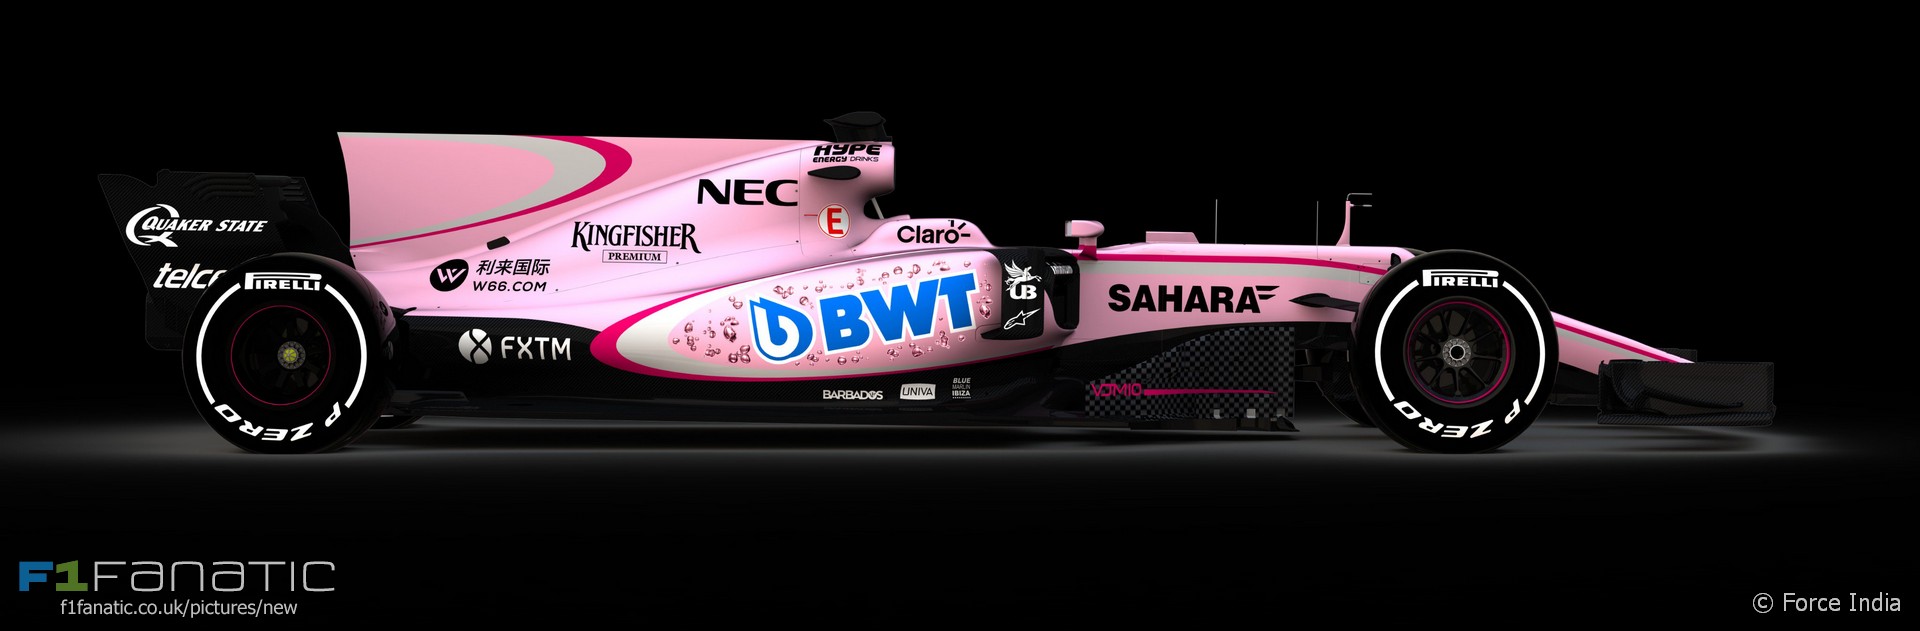 Force India Vjm10 New Livery F1 Fanatic